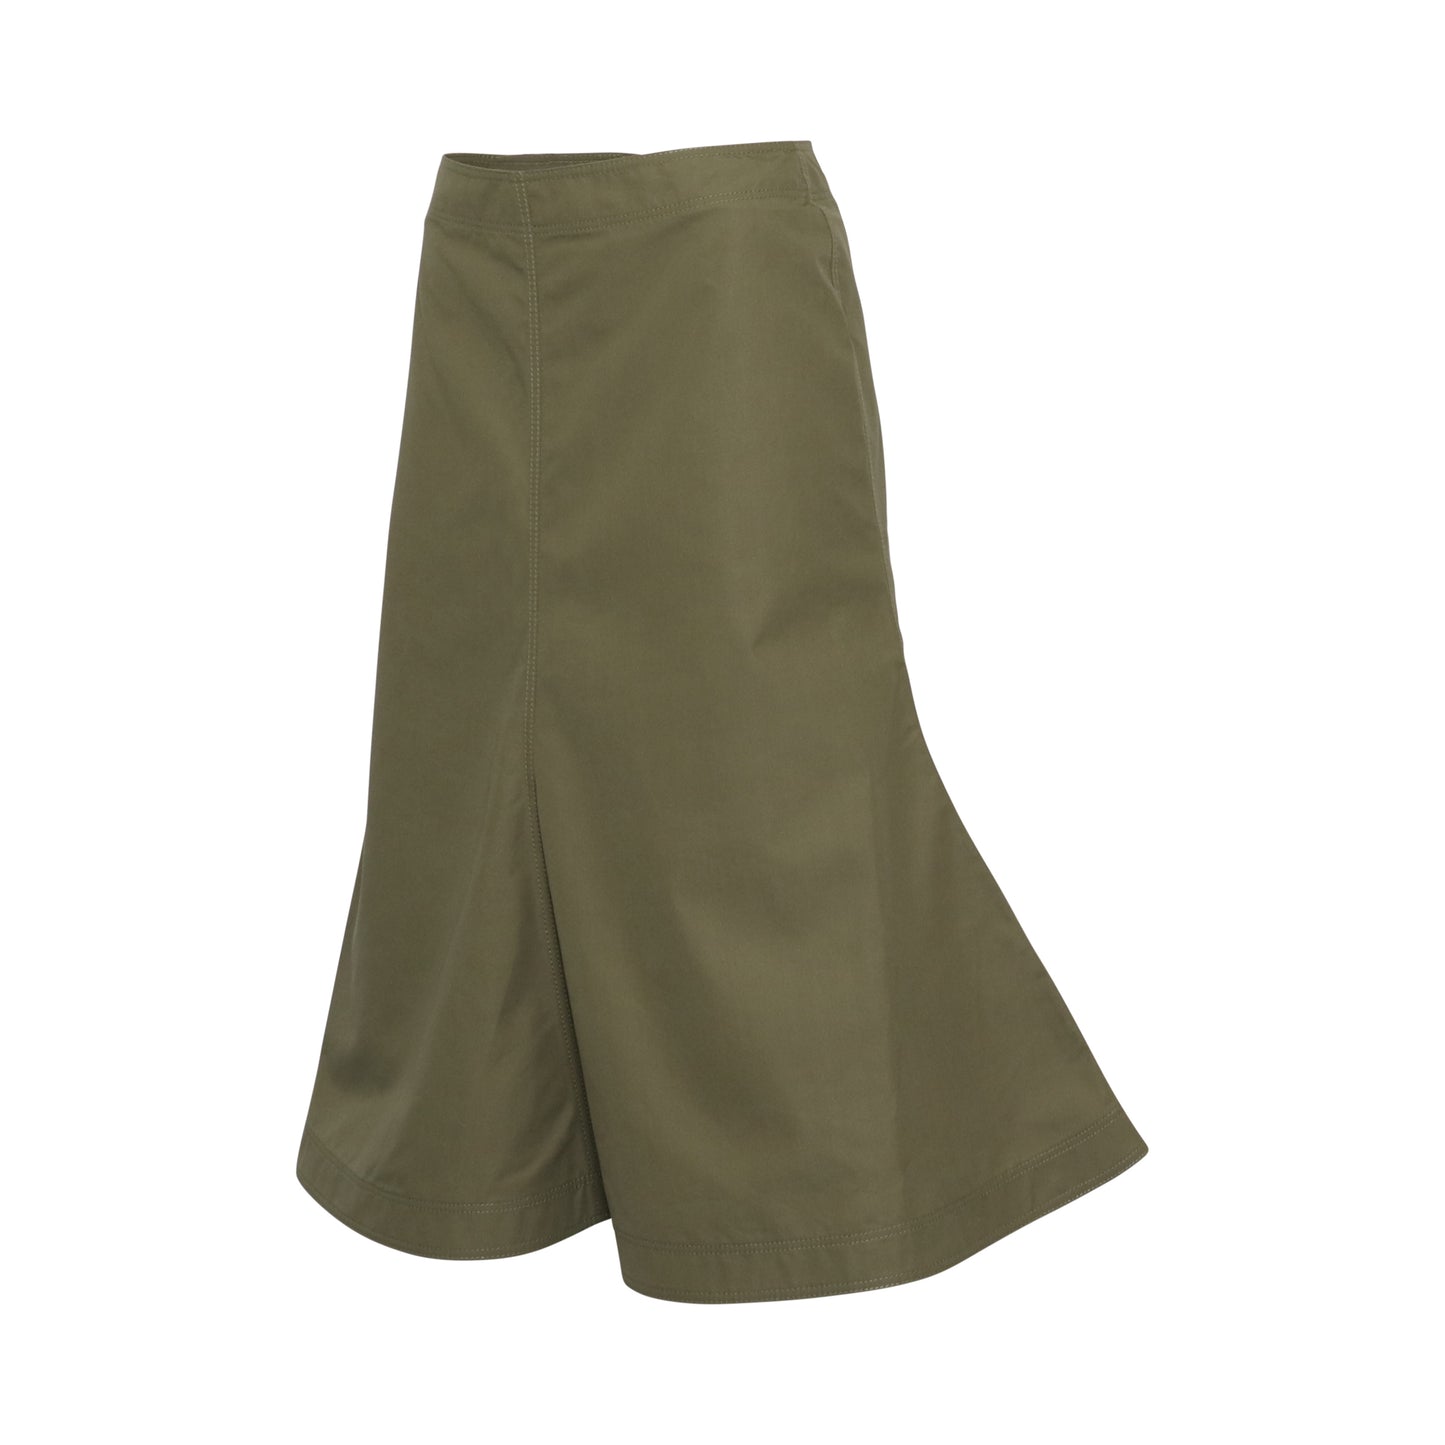 Midi Skirt in Khaki Green